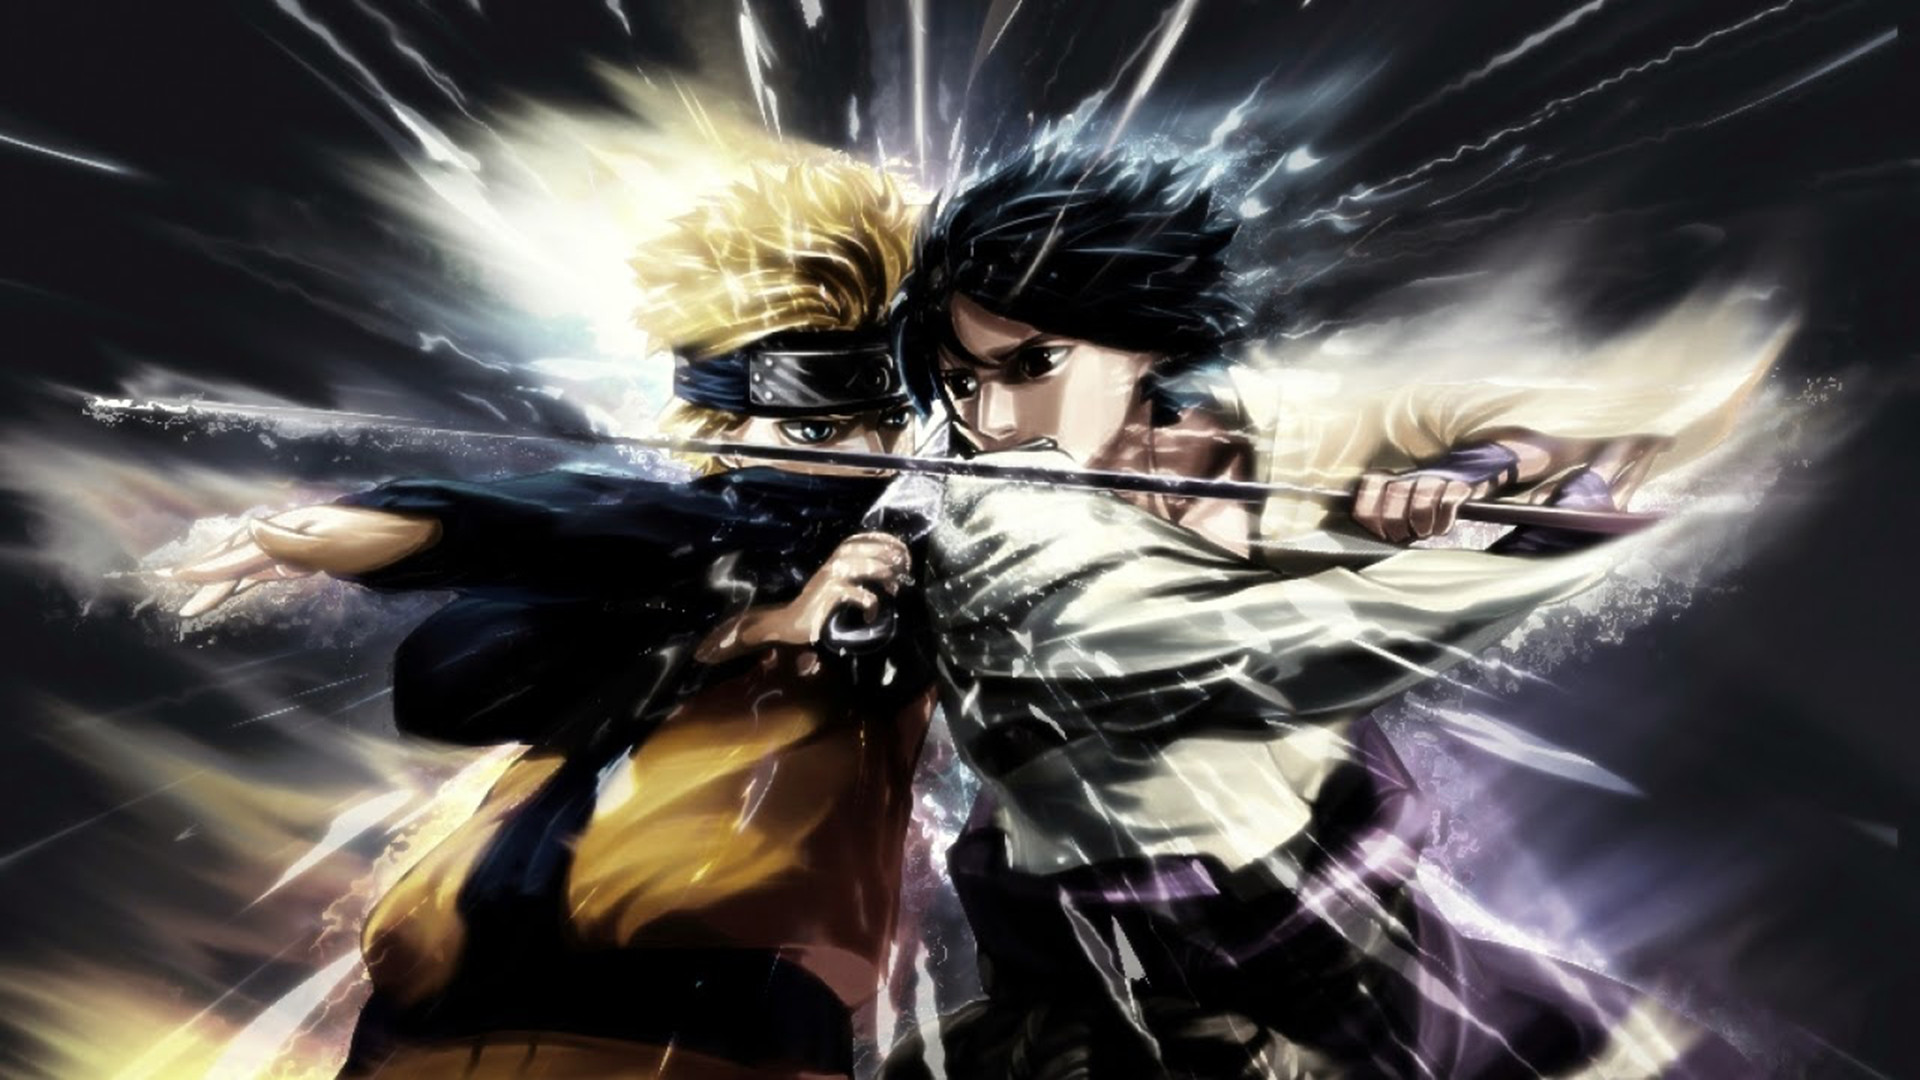 Naruto vs Sasuke Fighting HD desktop wallpaper Widescreen Imagenes De Naruto Y Sasuke Wallpapers Wallpapers